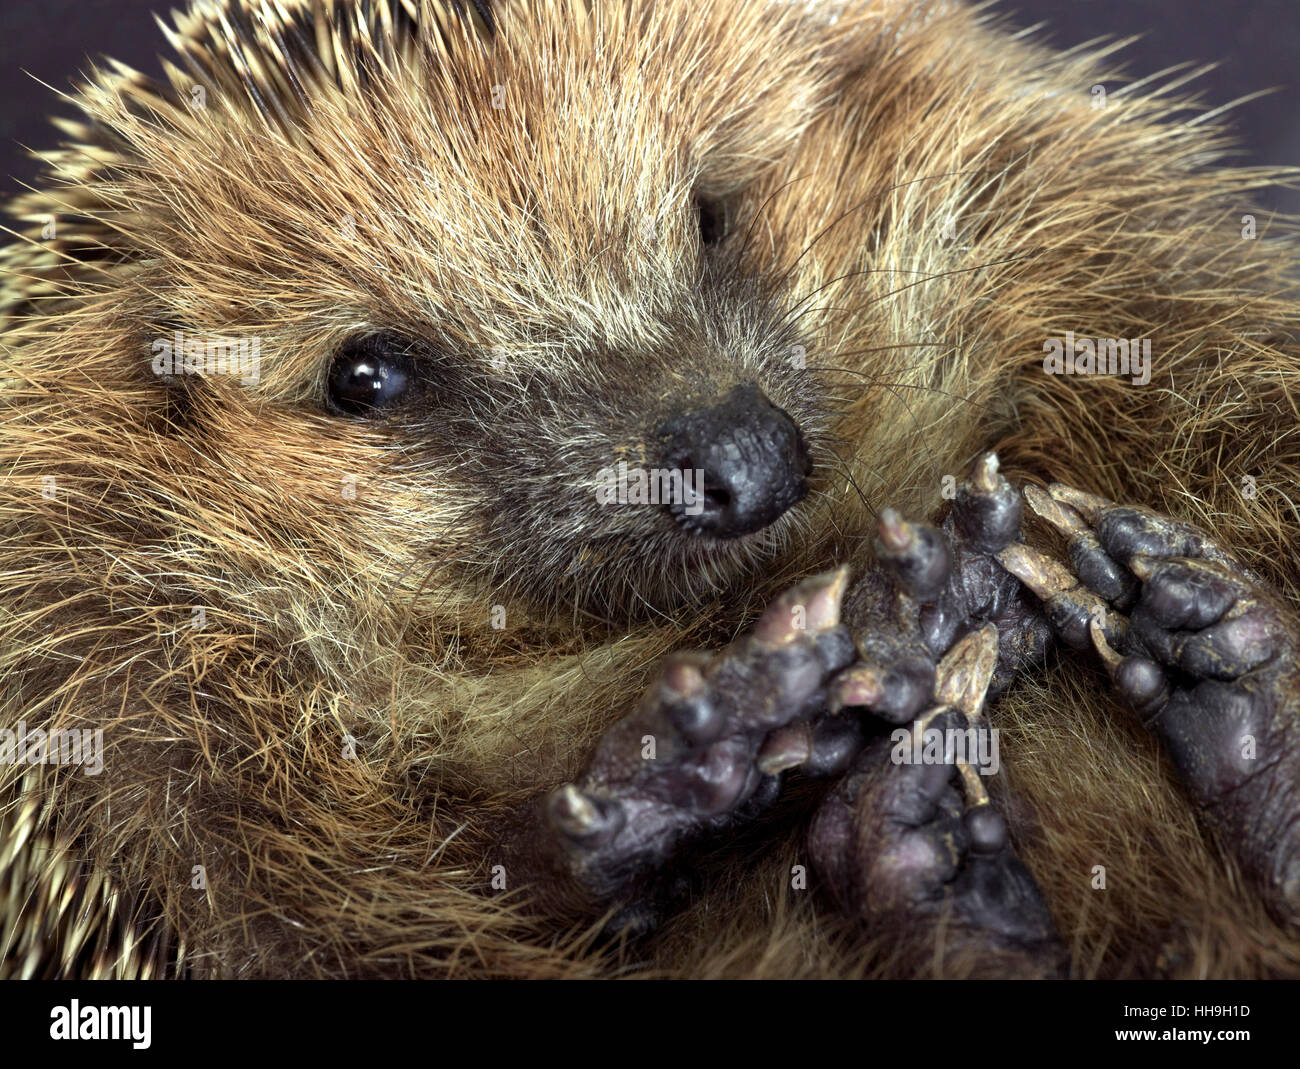 mammal, hedgehog, unrolled, beautiful, beauteously, nice, macro, close-up, Stock Photo